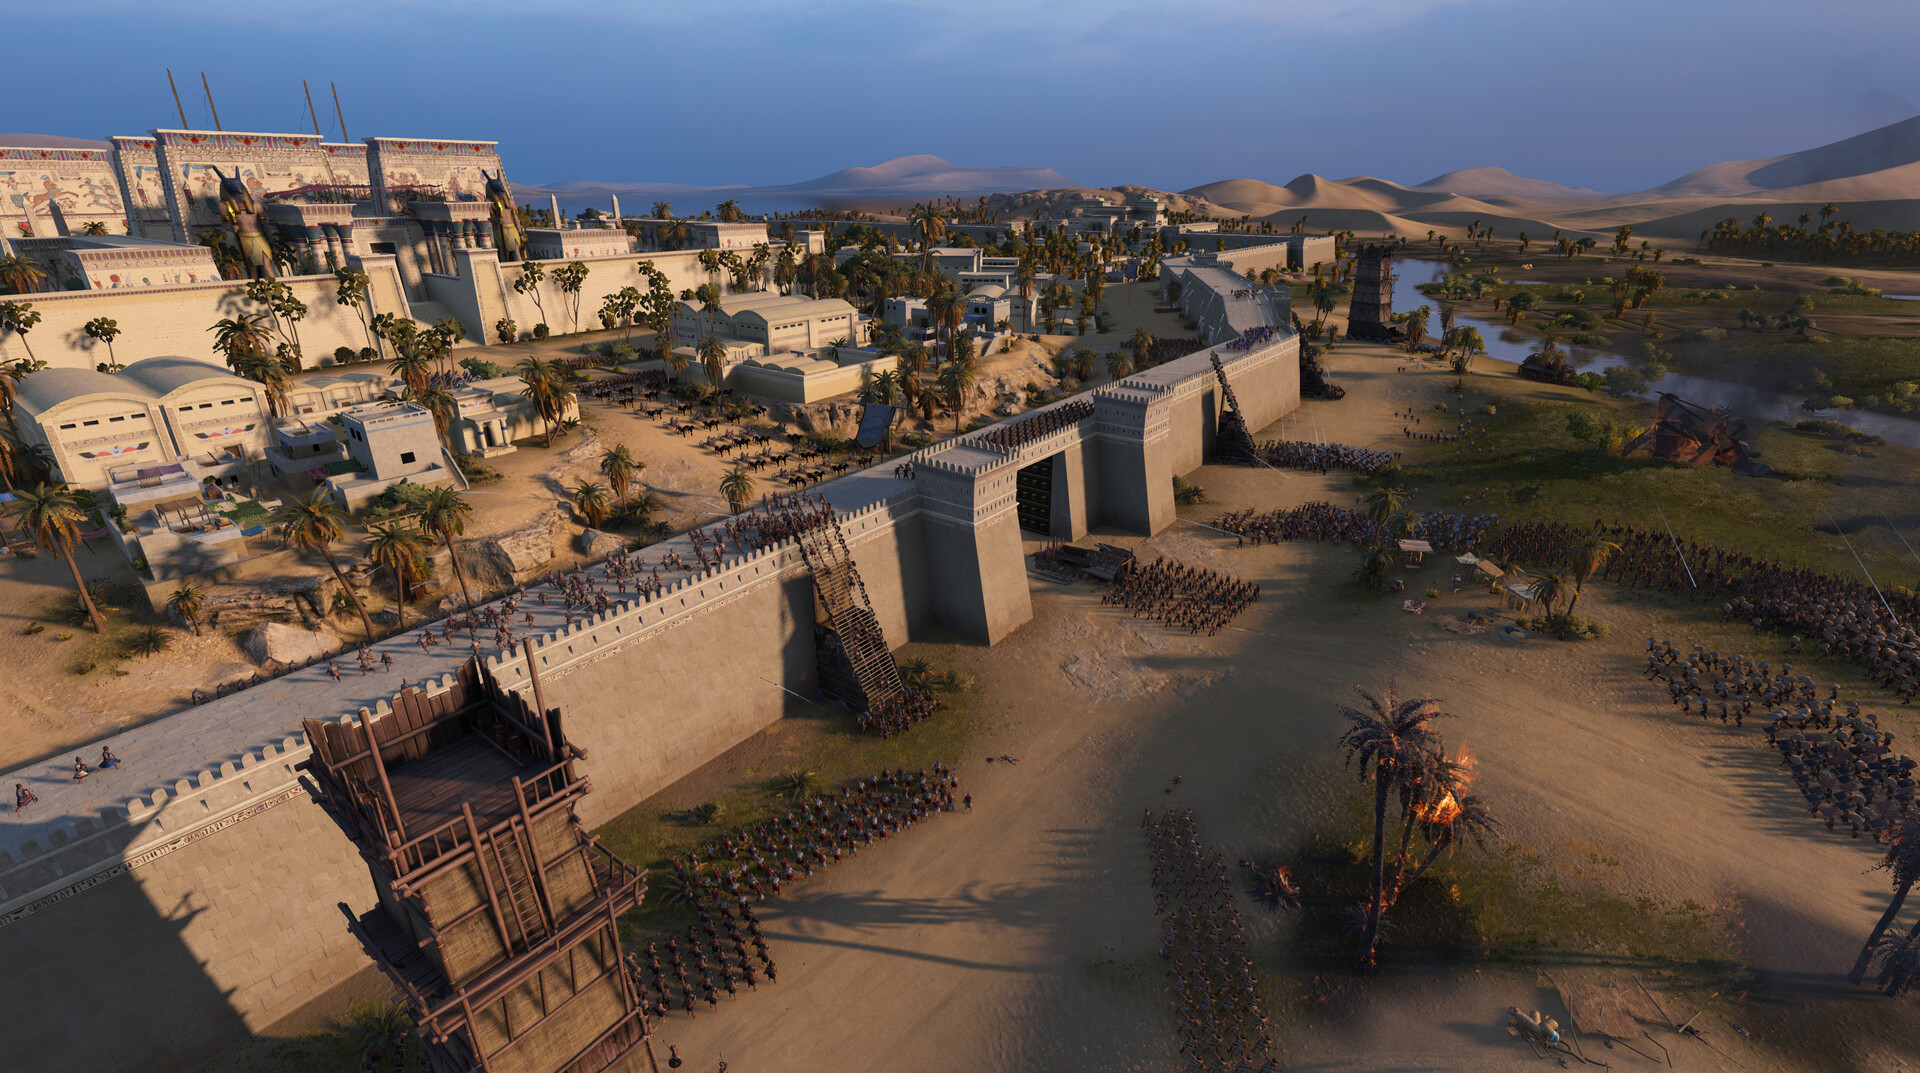 Скриншот Total War: PHARAOH - Dynasty Edition * STEAM RU ⚡